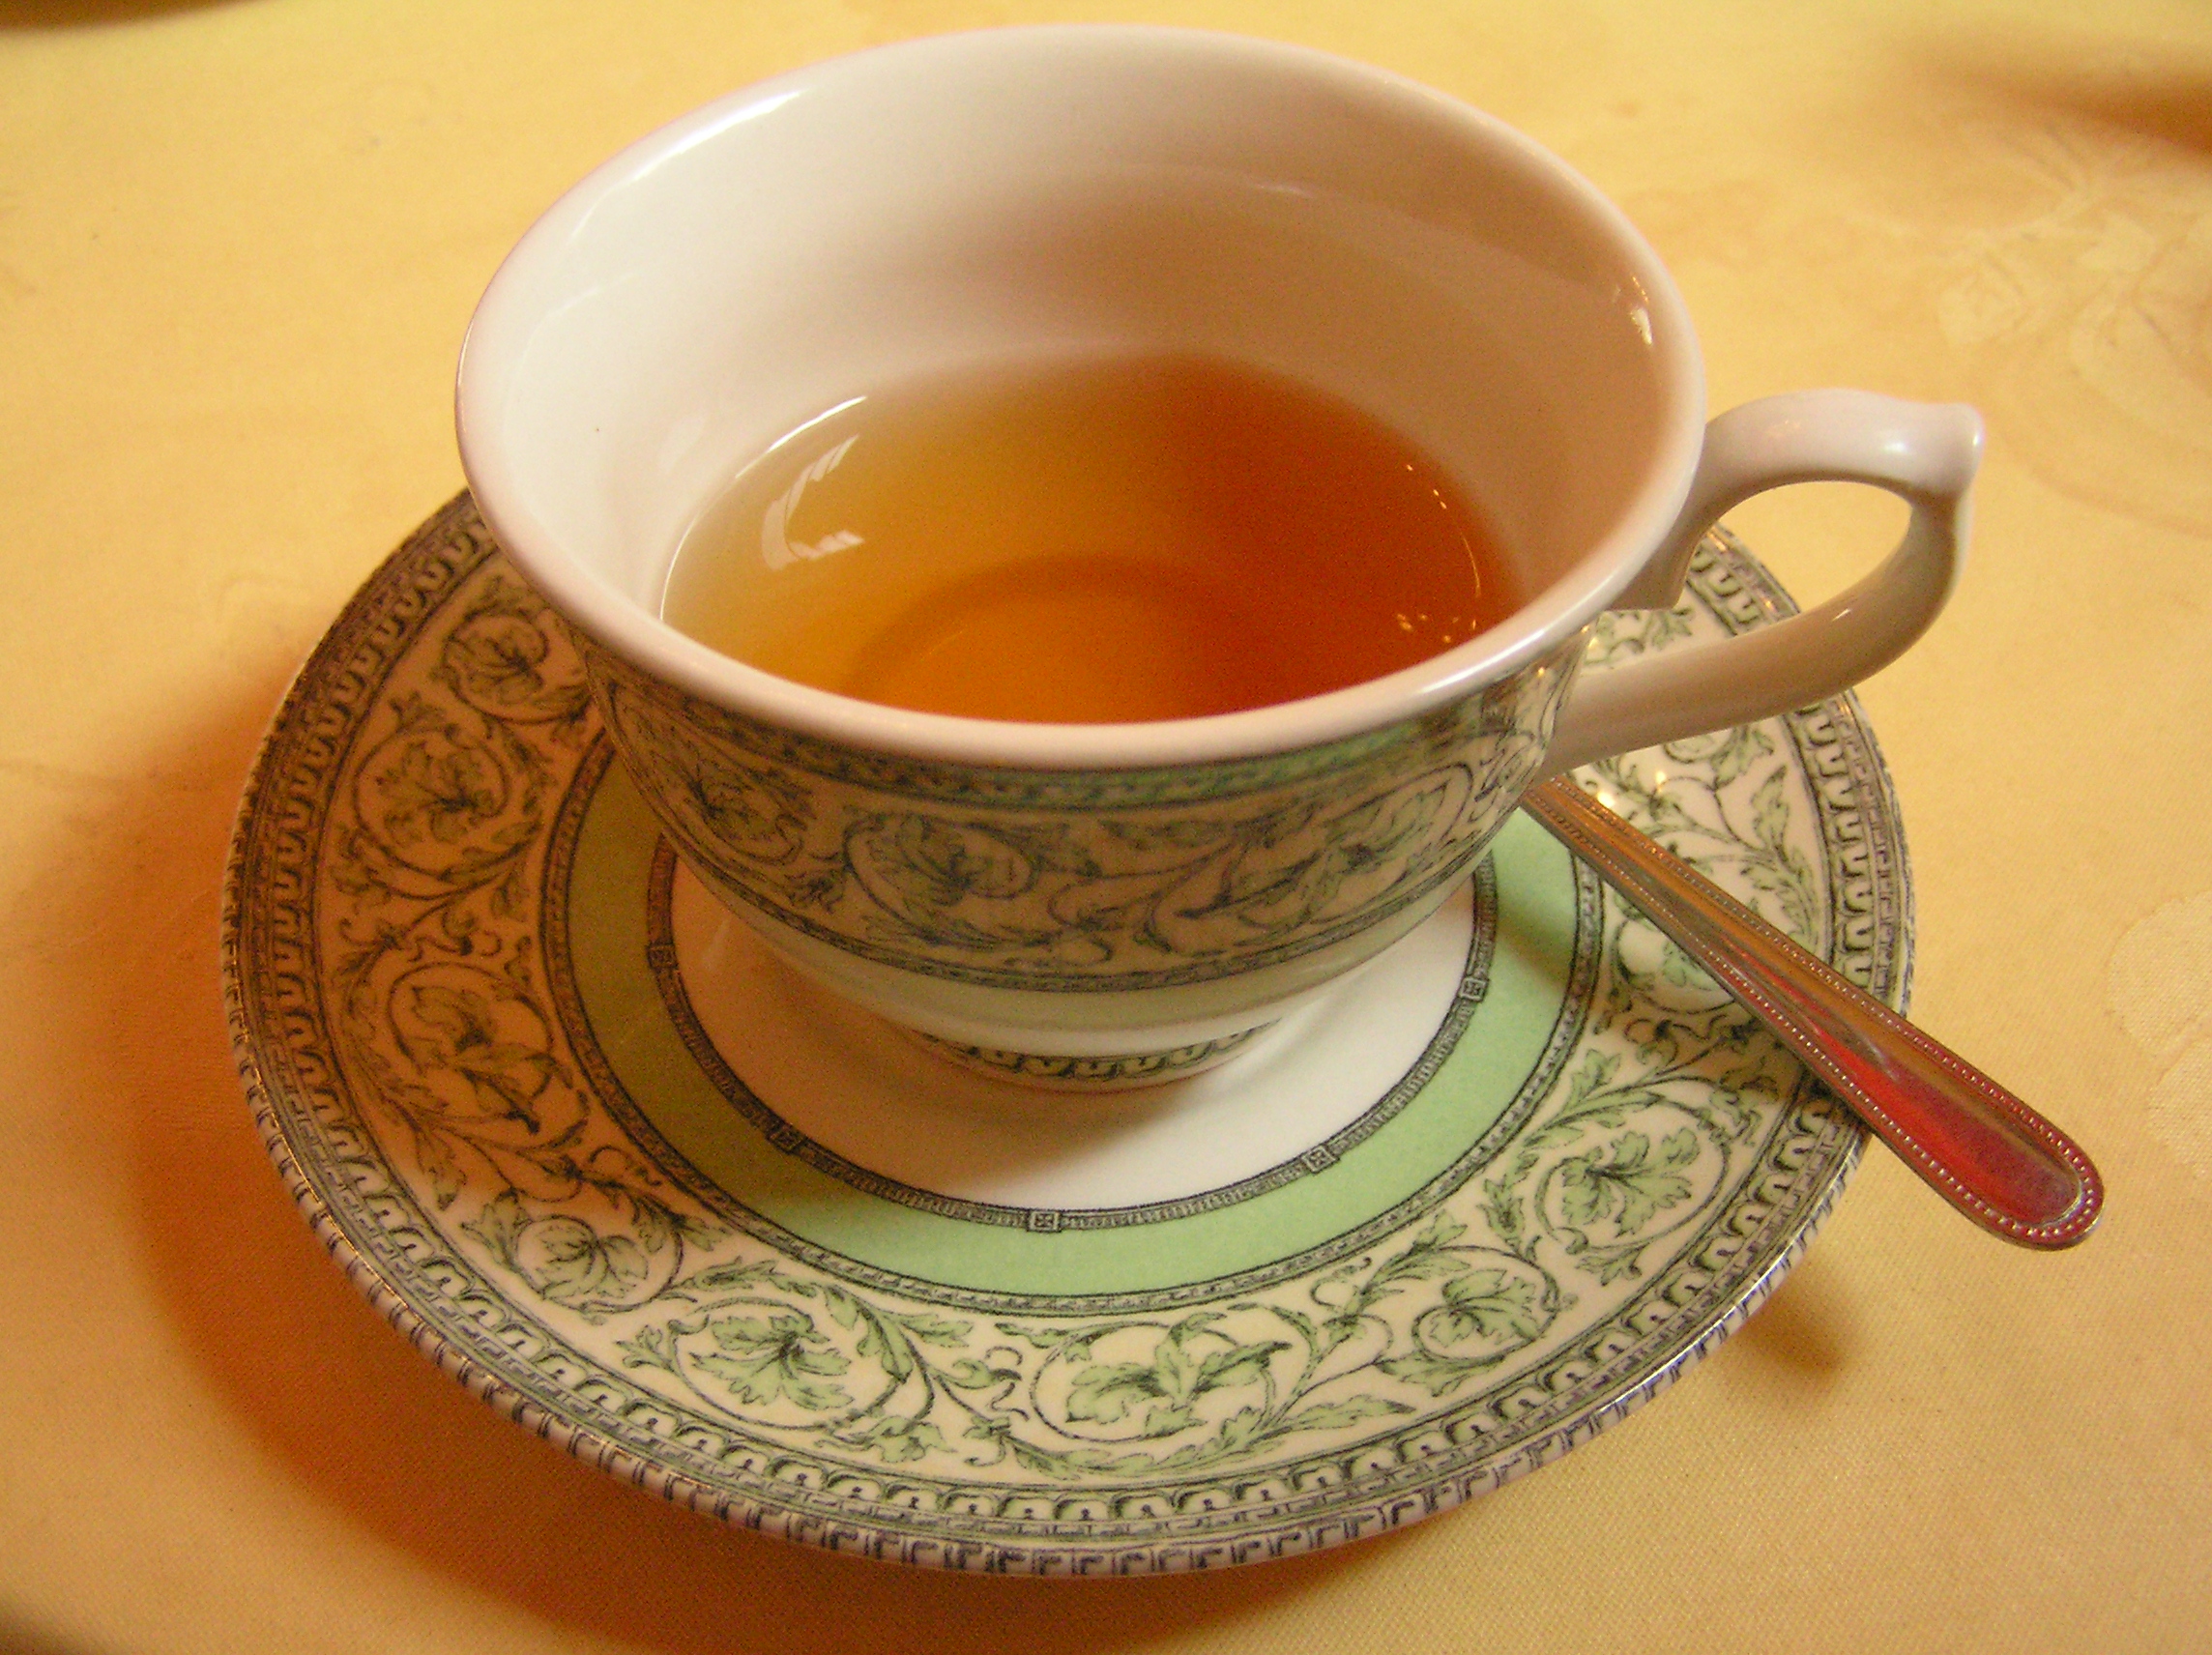 File:Cup of tea, Scotland.jpg - Wikimedia Commons